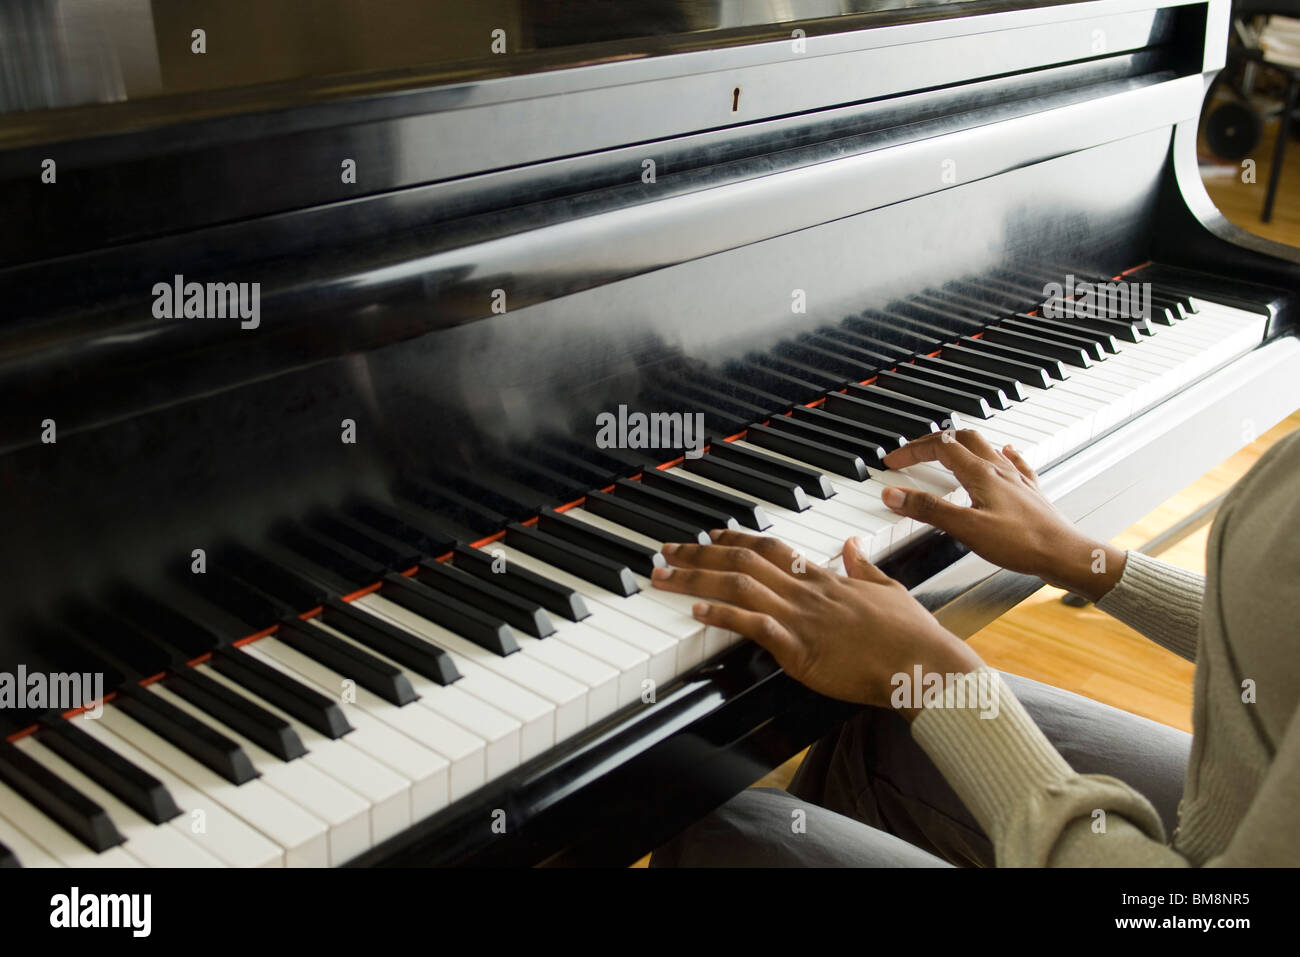 Pianist playing piano Stock Photo